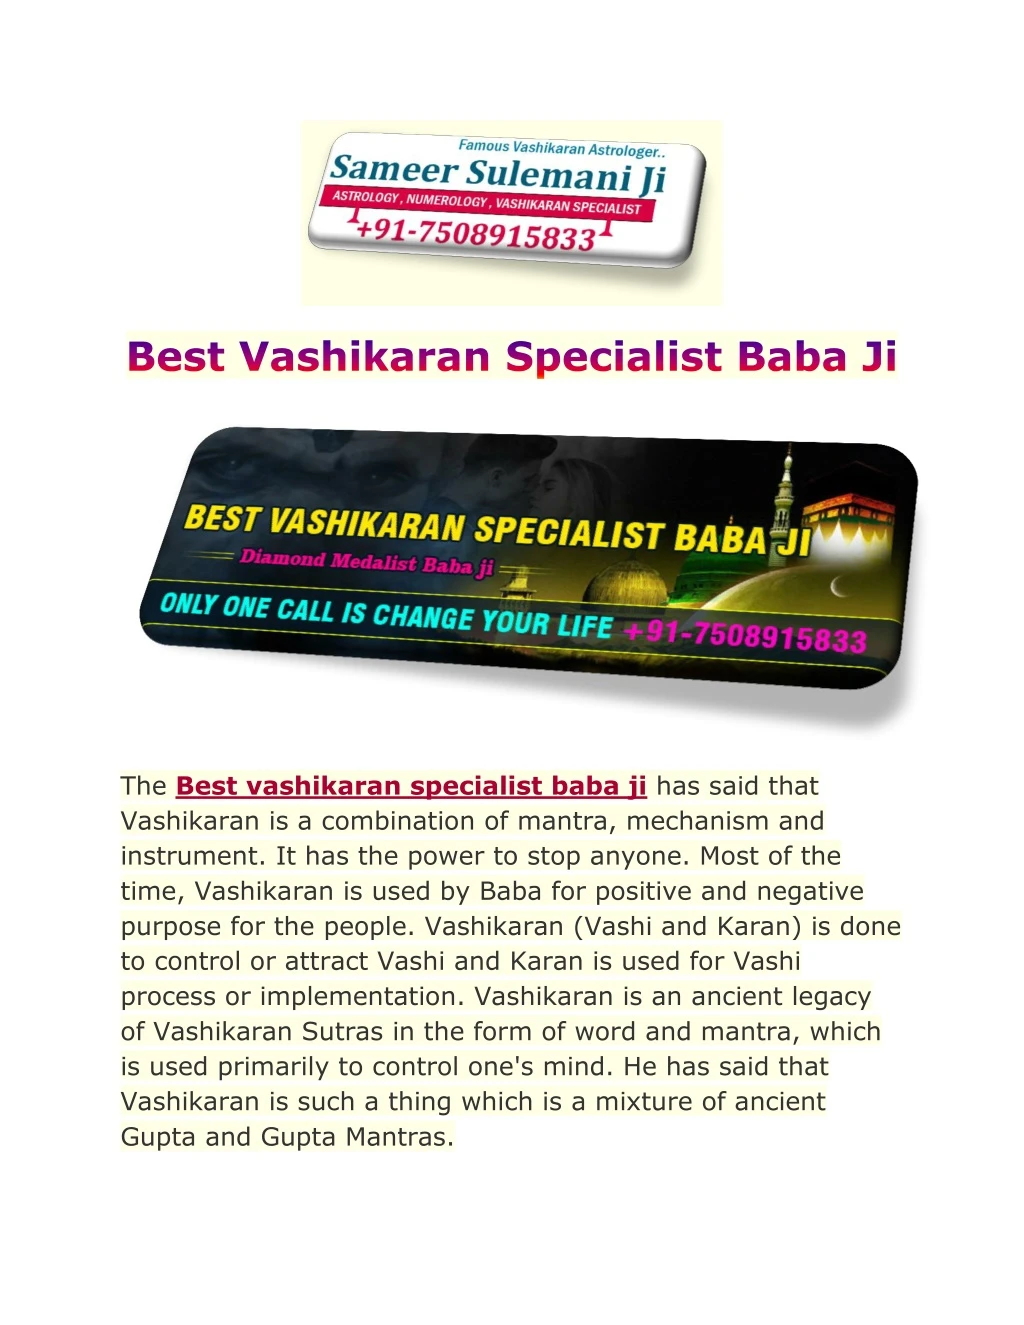 the best vashikaran specialist baba ji has said